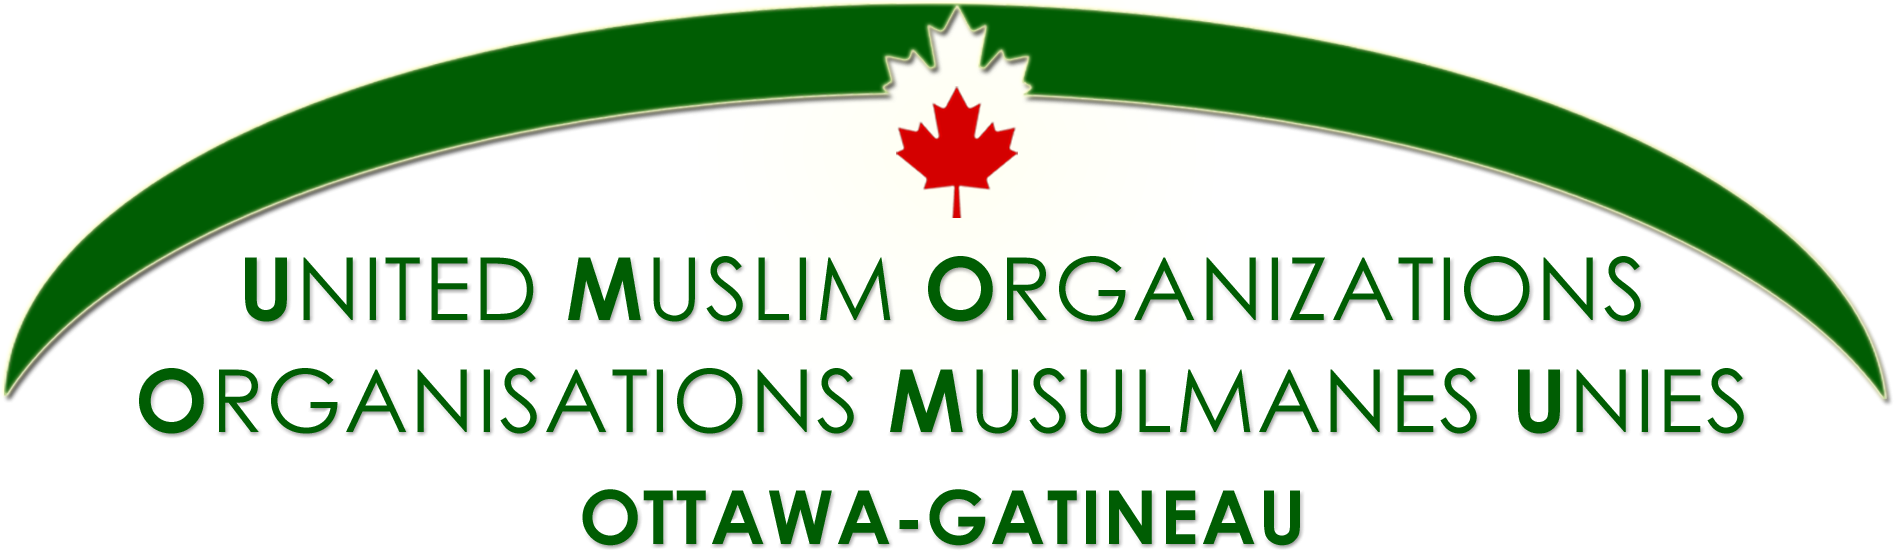 United Muslim Organizations of Ottawa-Gatineau